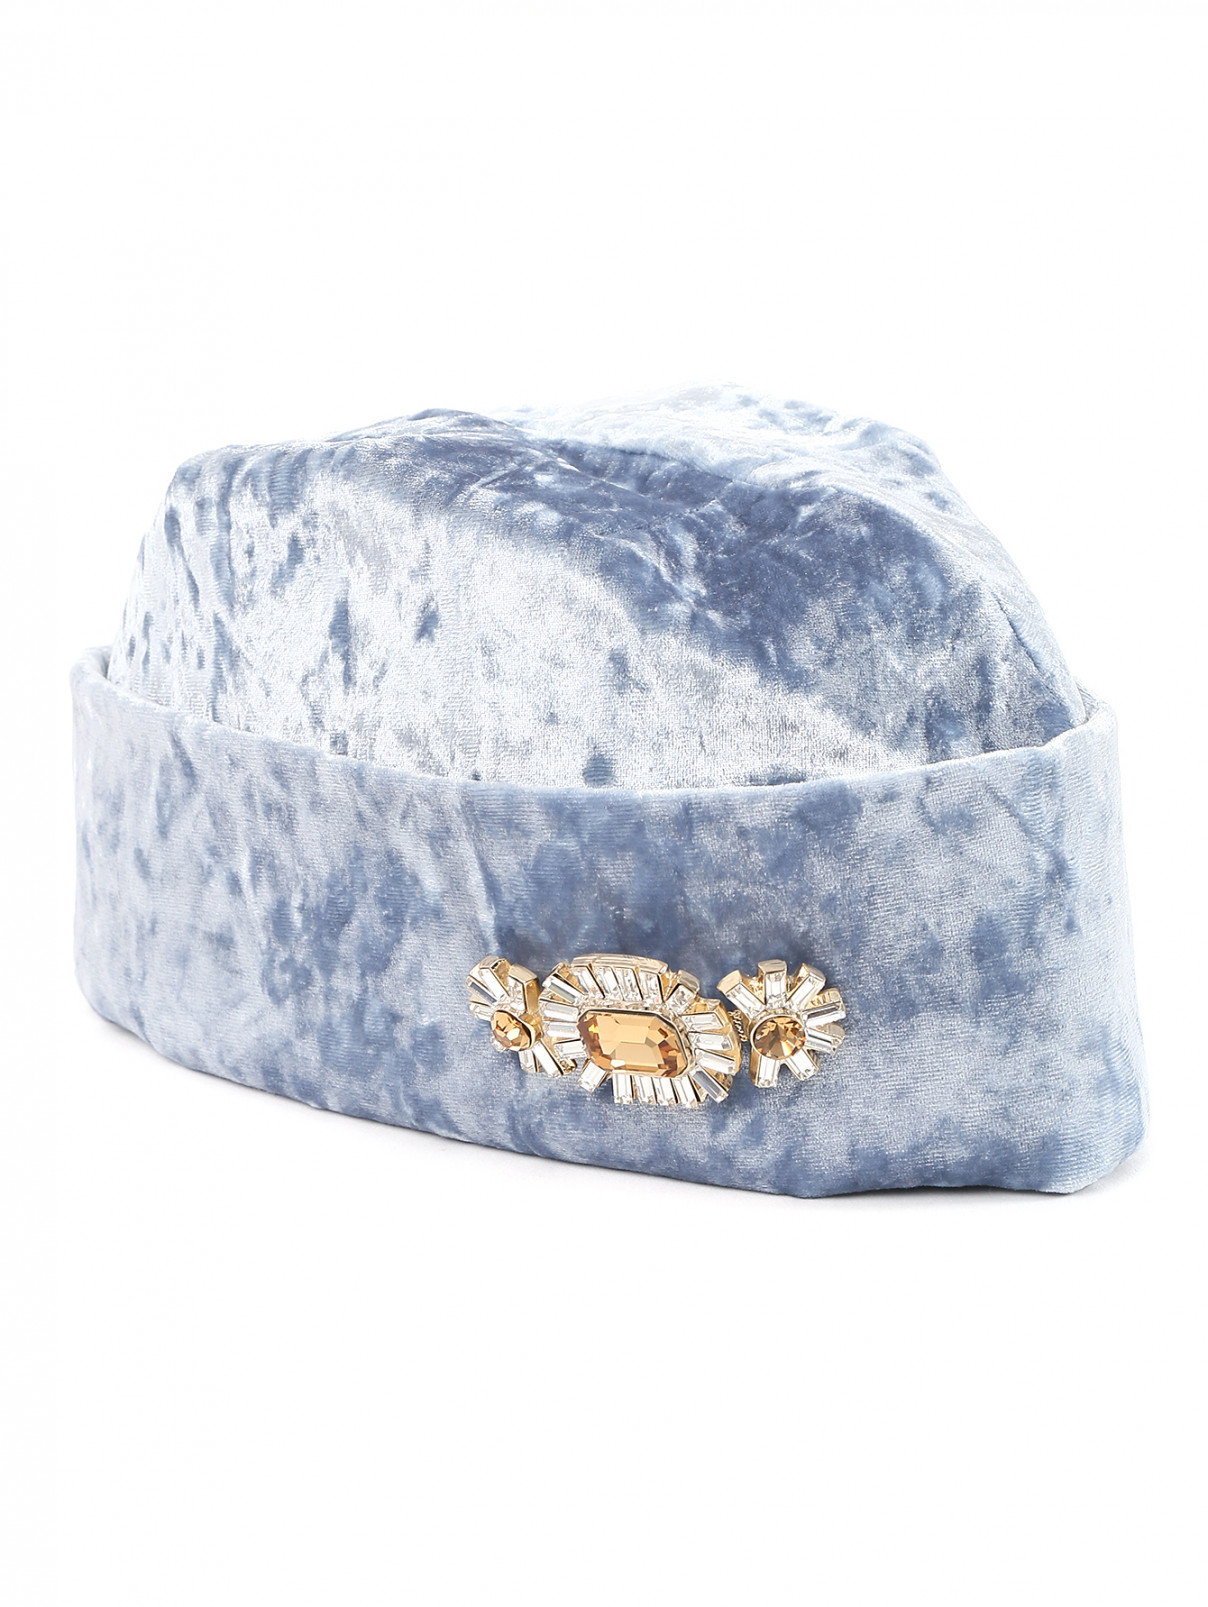 Шляпа из бархата с брошью Federica Moretti  –  Общий вид  – Цвет:  Синий